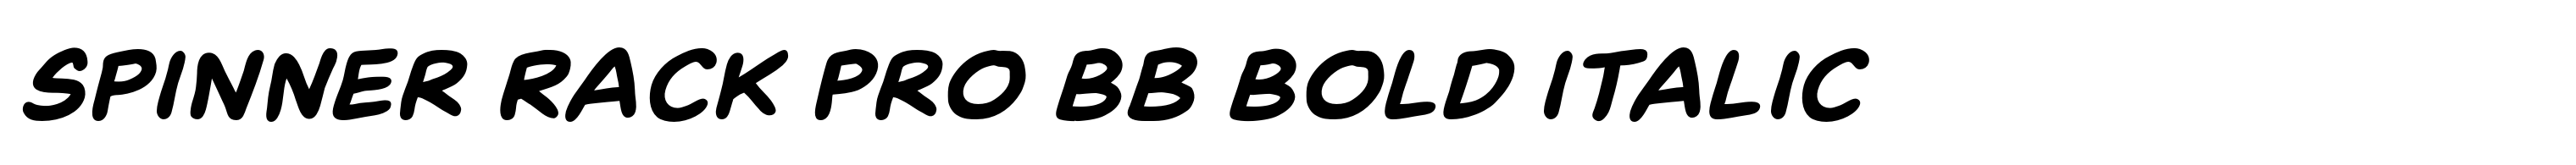 Spinner Rack Pro BB Bold Italic